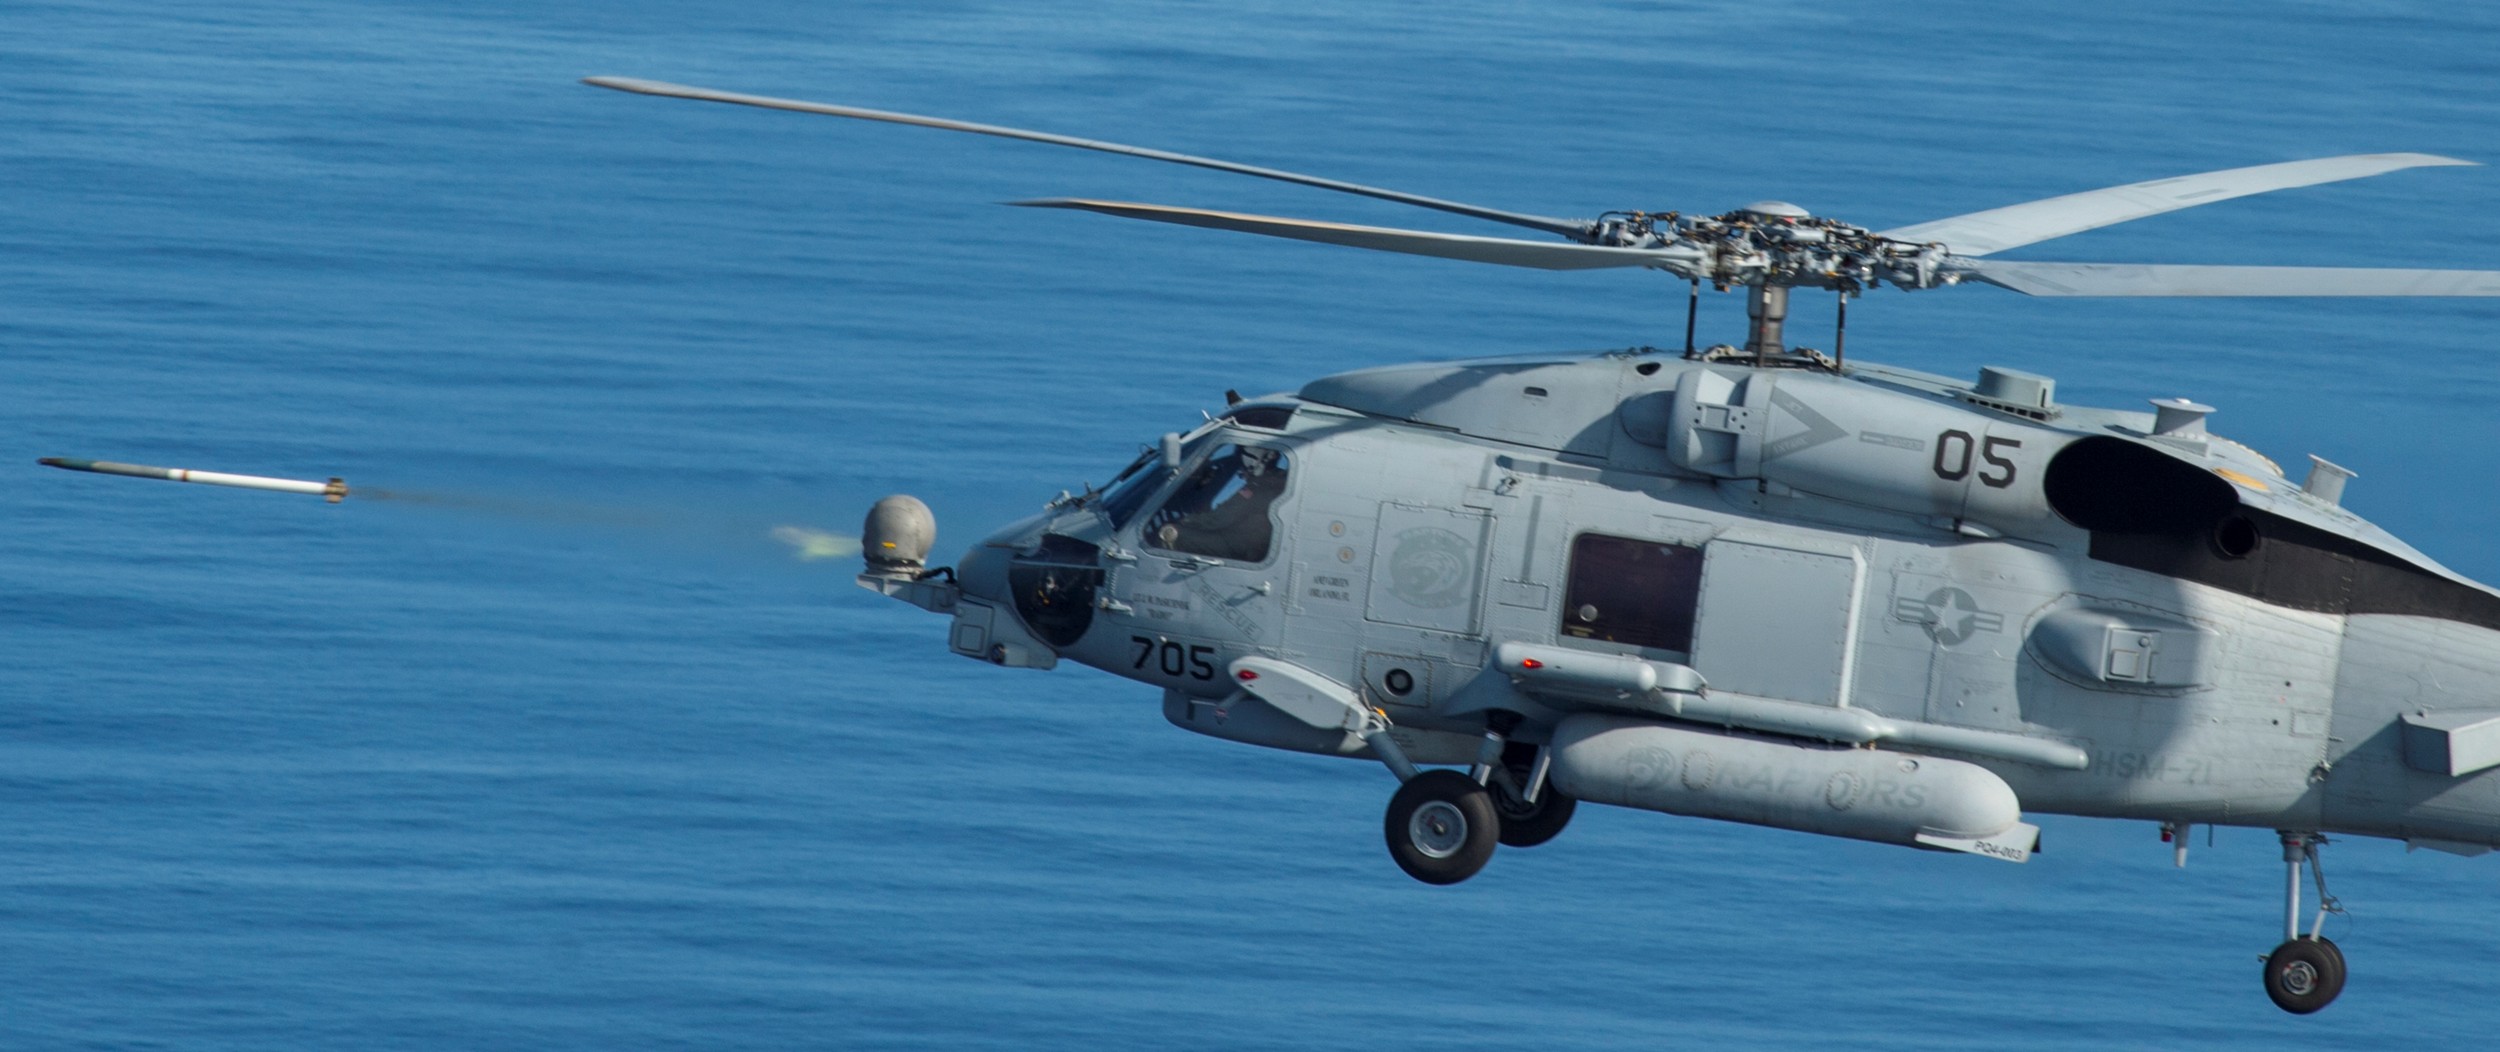 hsm-71 raptors helicopter maritime strike squadron mh-60r seahawk navy 2015 19 zuni ffar